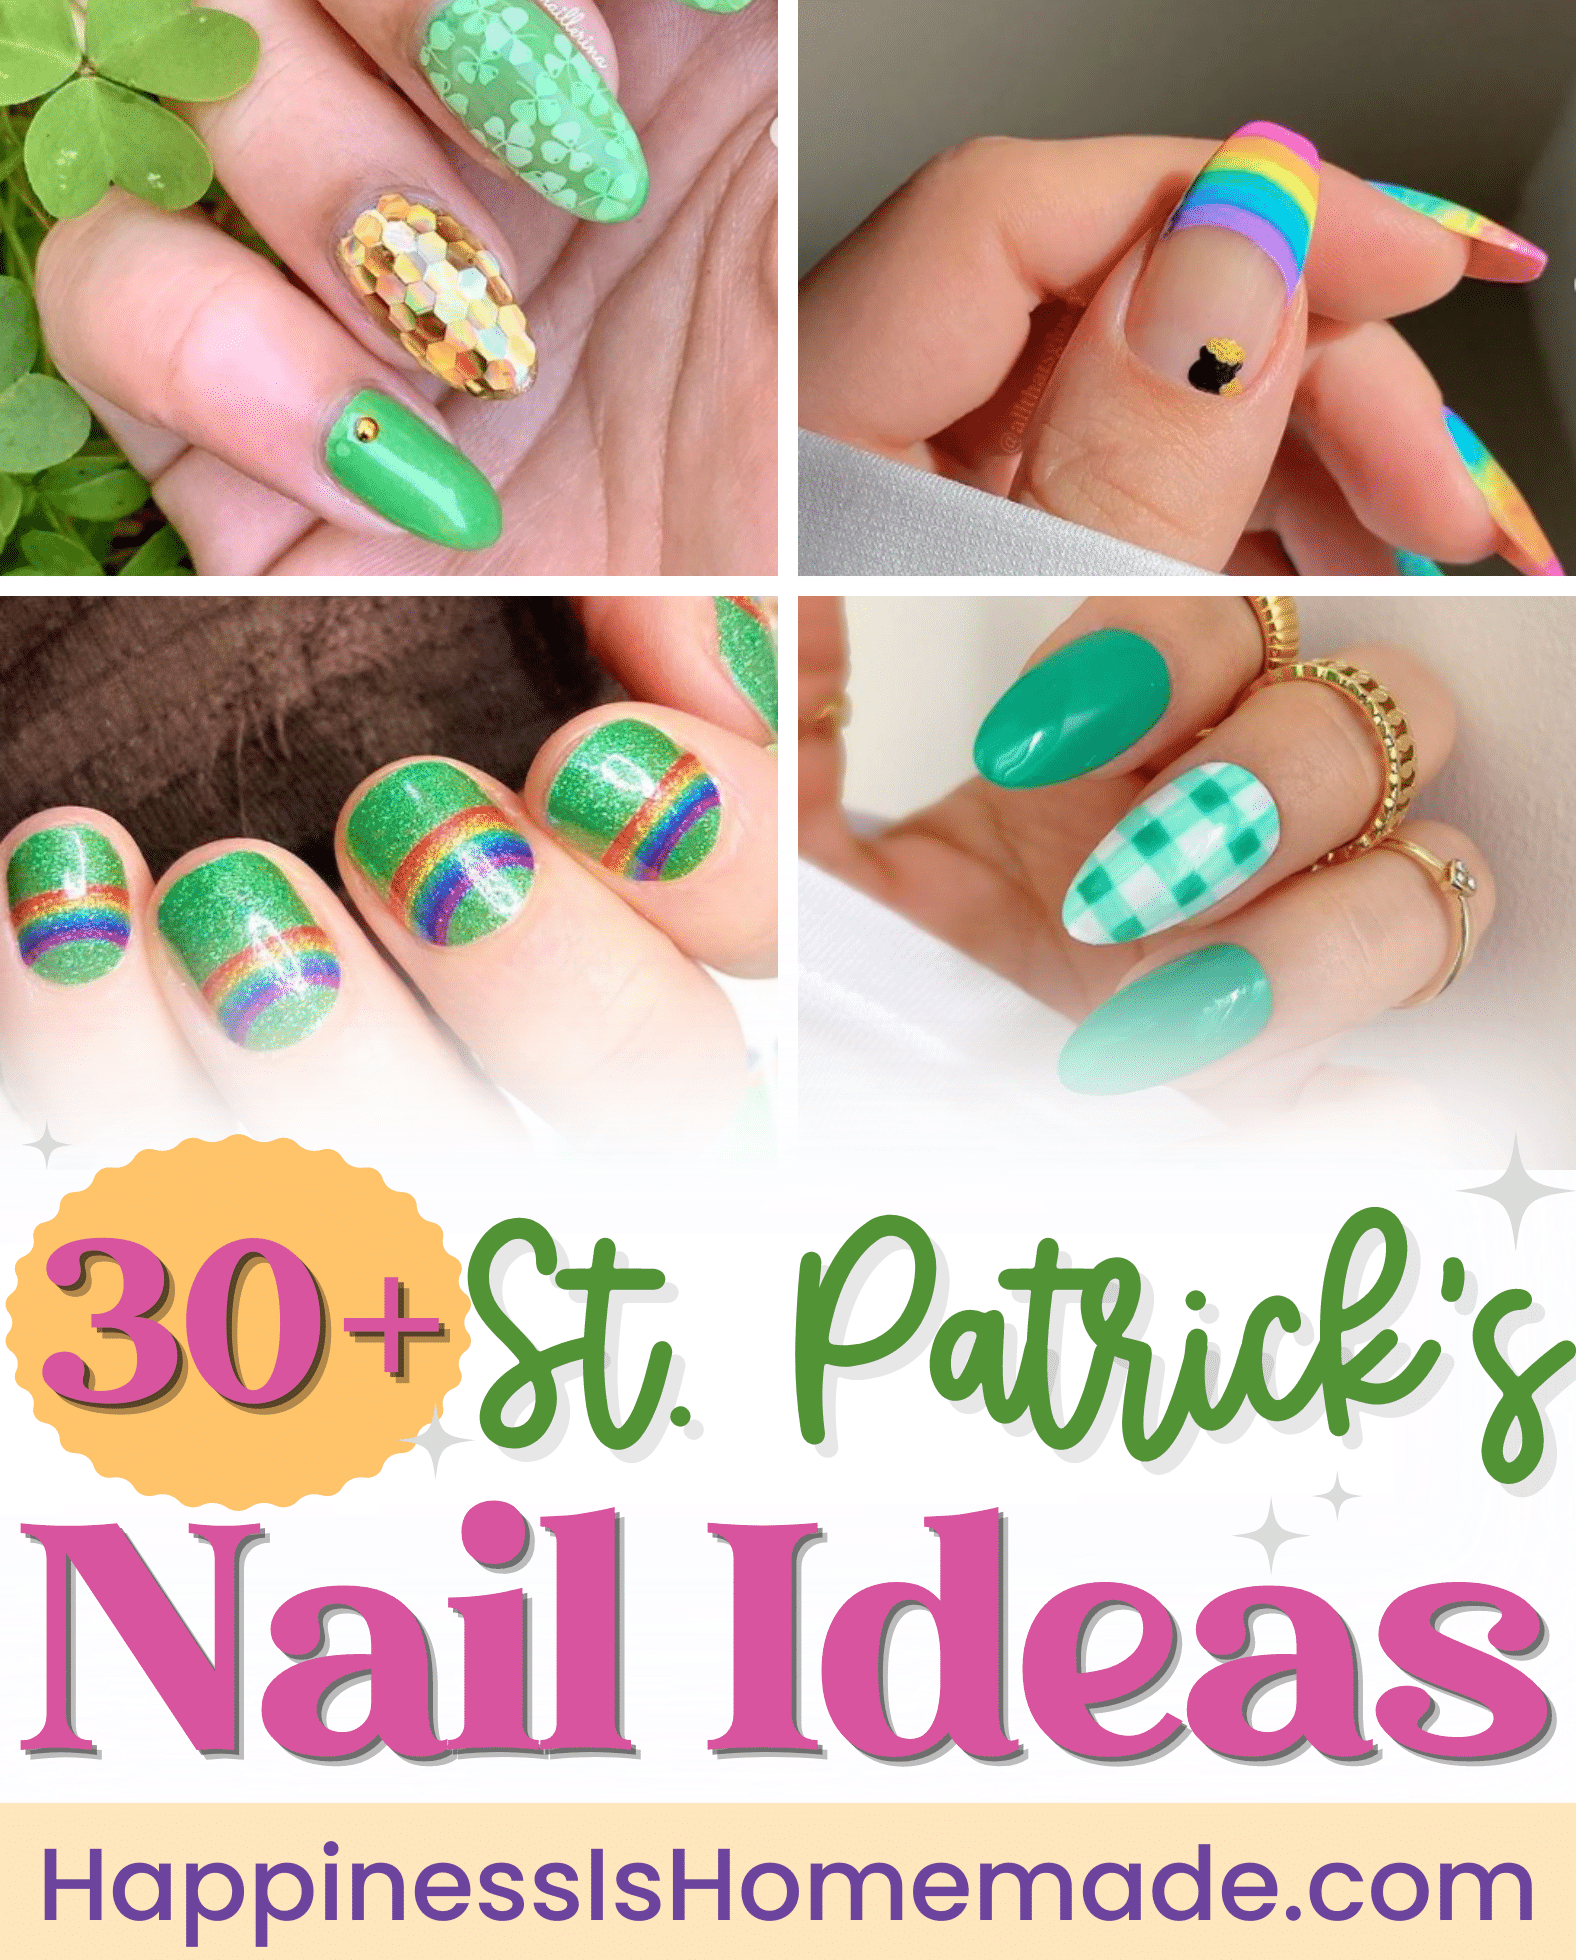 30+ st patricks day nail ideas pin graphic